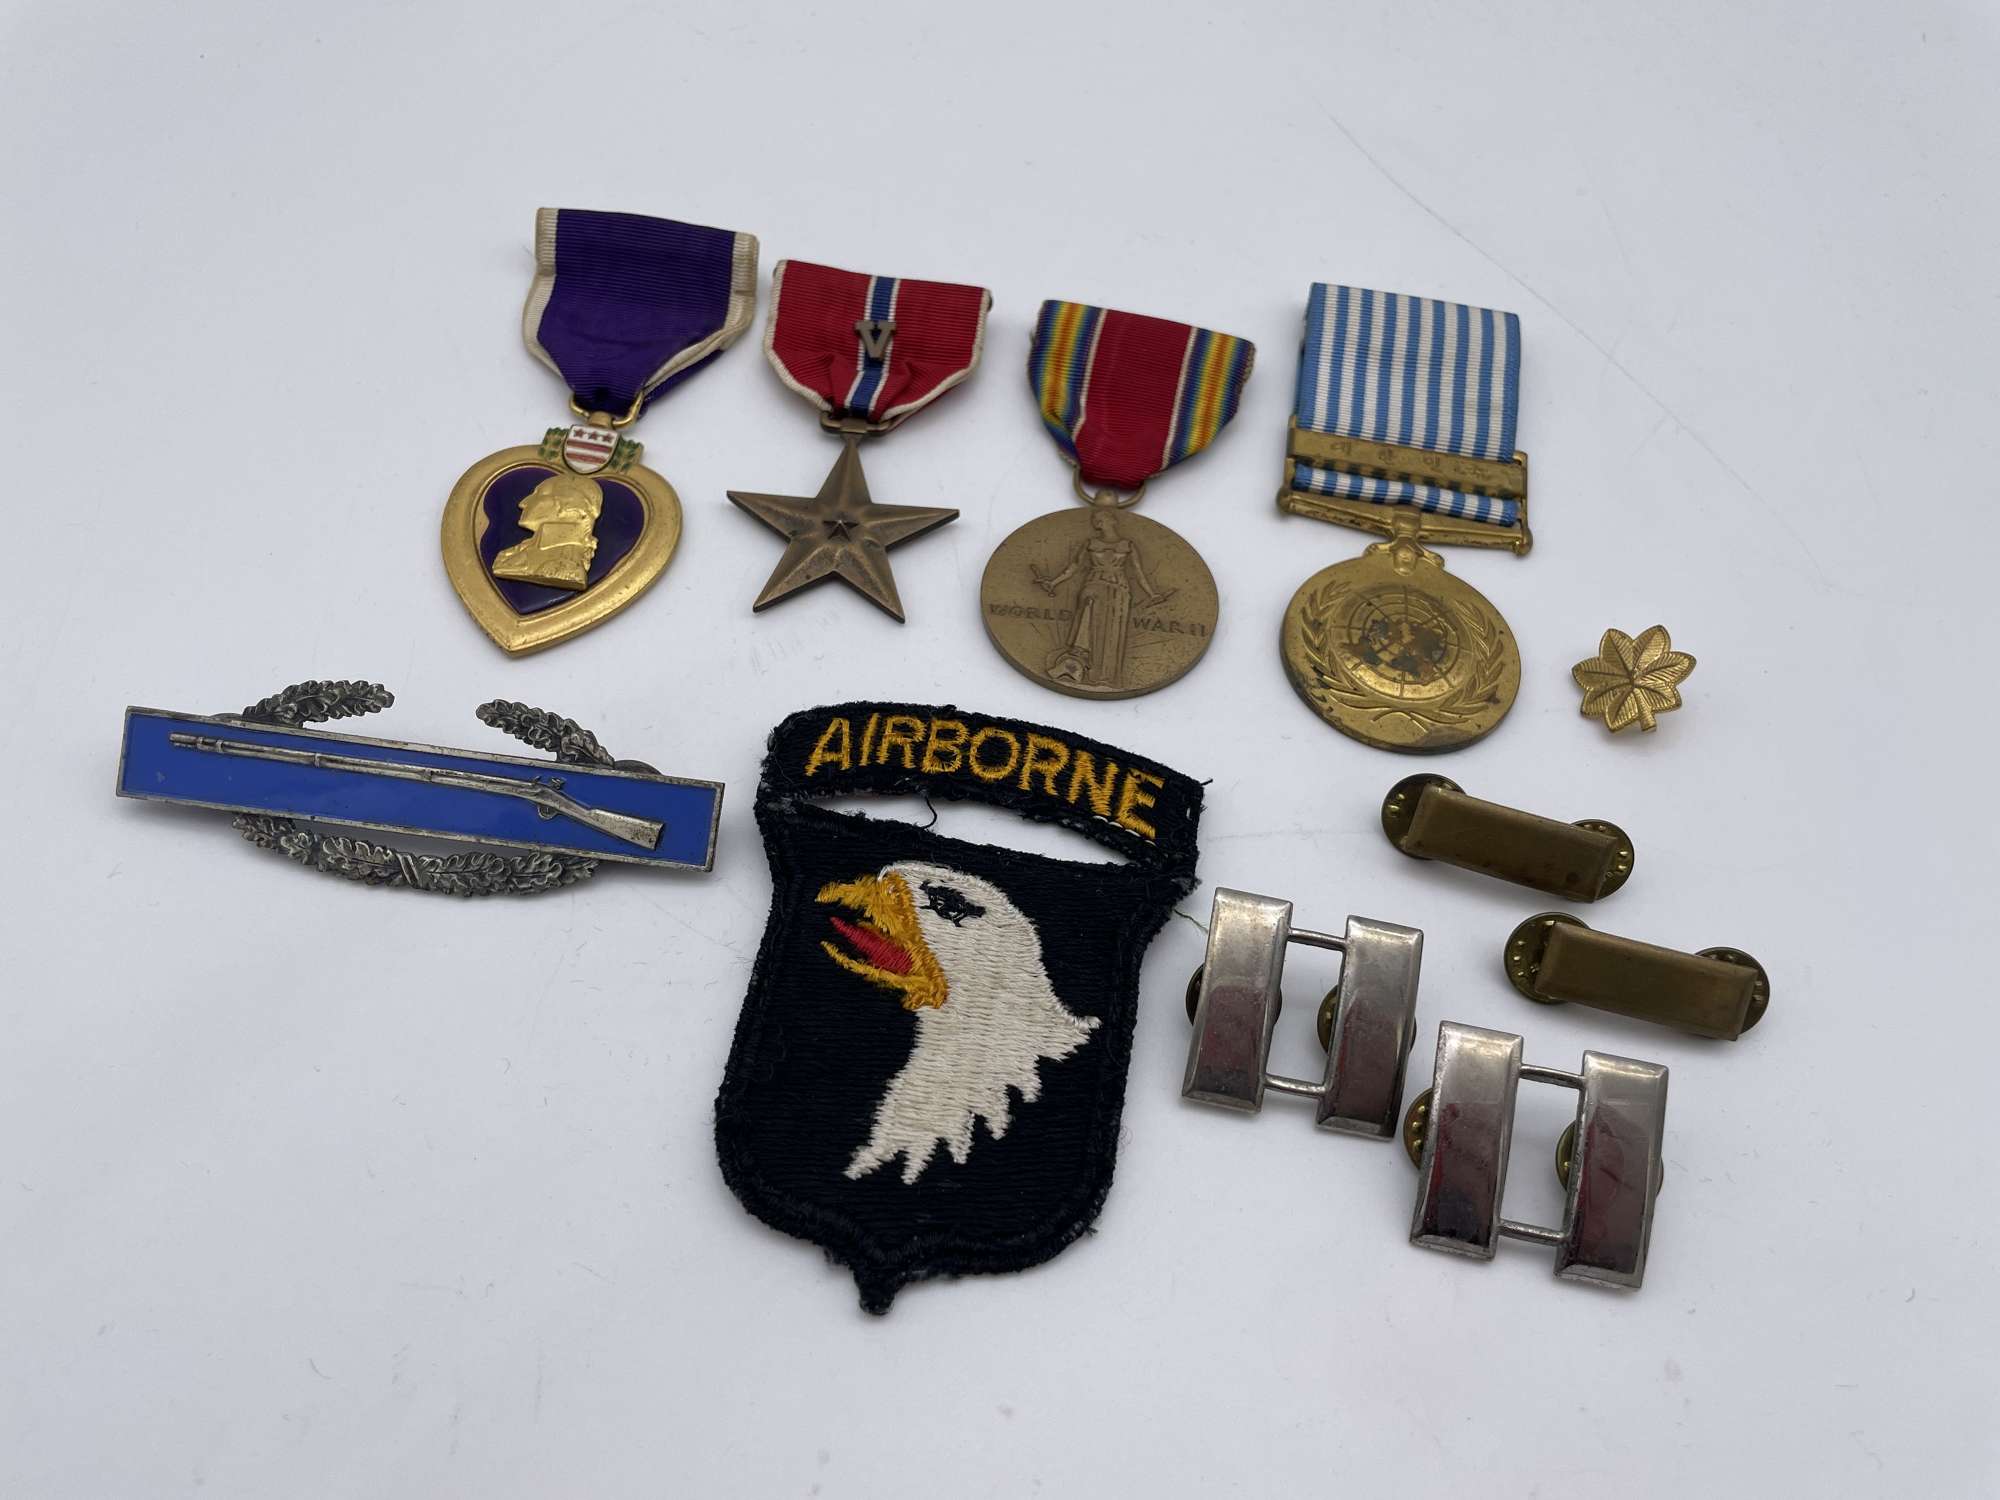 Original World War Two to Korean War Era American Purple Heart Grouping, 101st Airborne